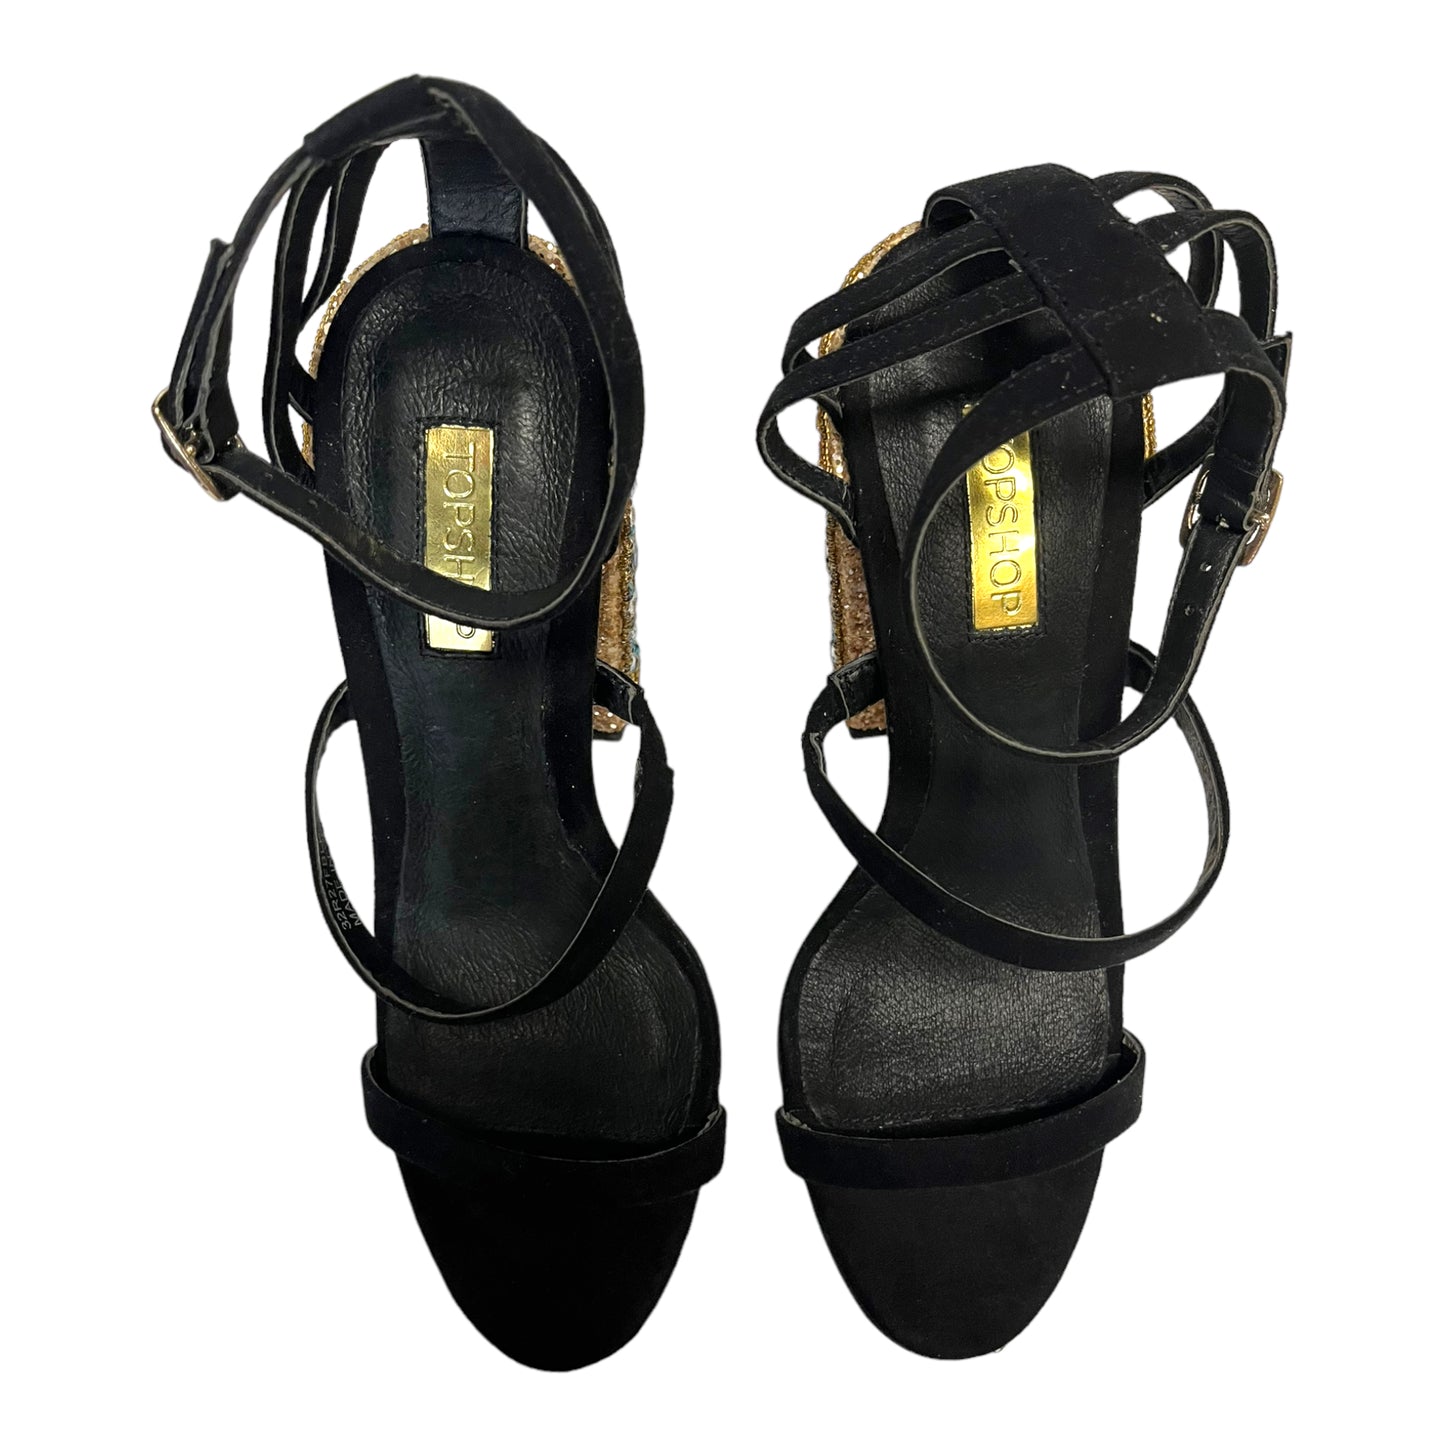 Jewel Heel Strappy Sandals Size 38 NEW